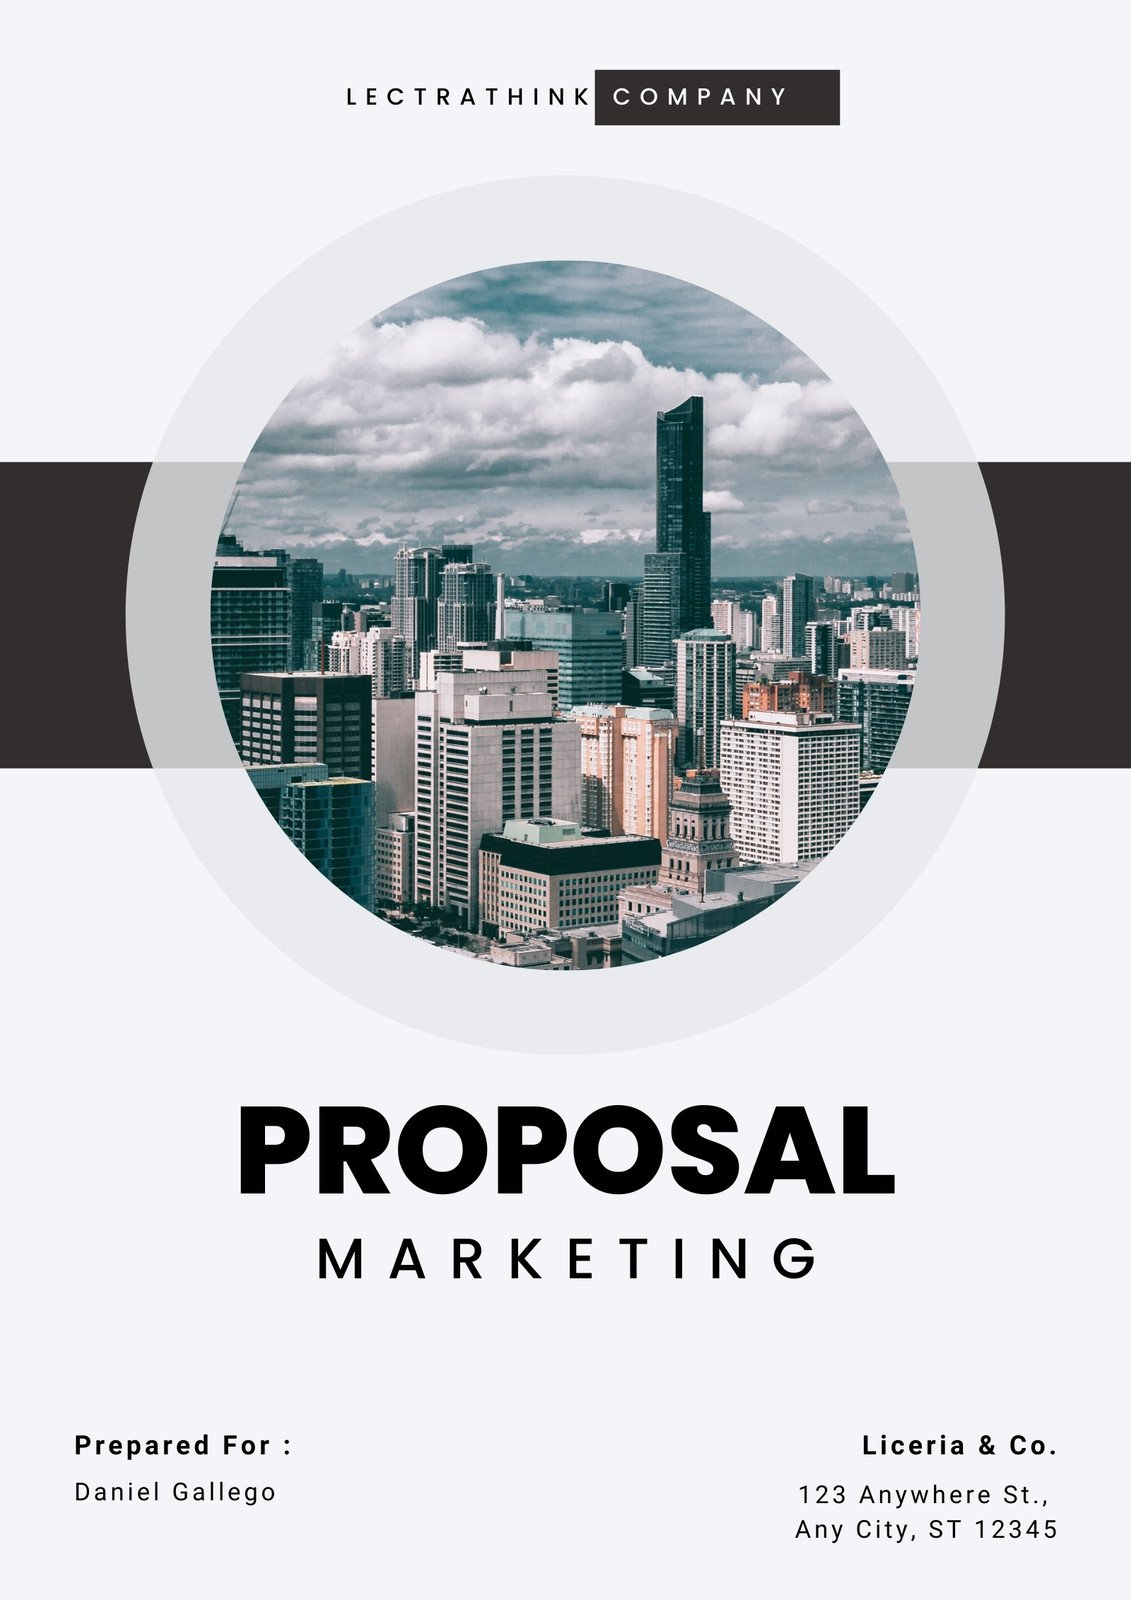 https://marketplace.canva.com/EAE_-2Sqo-0/1/0/1131w/canva-clean-minimalist-marketing-proposal-JV9zrSmZrSo.jpg